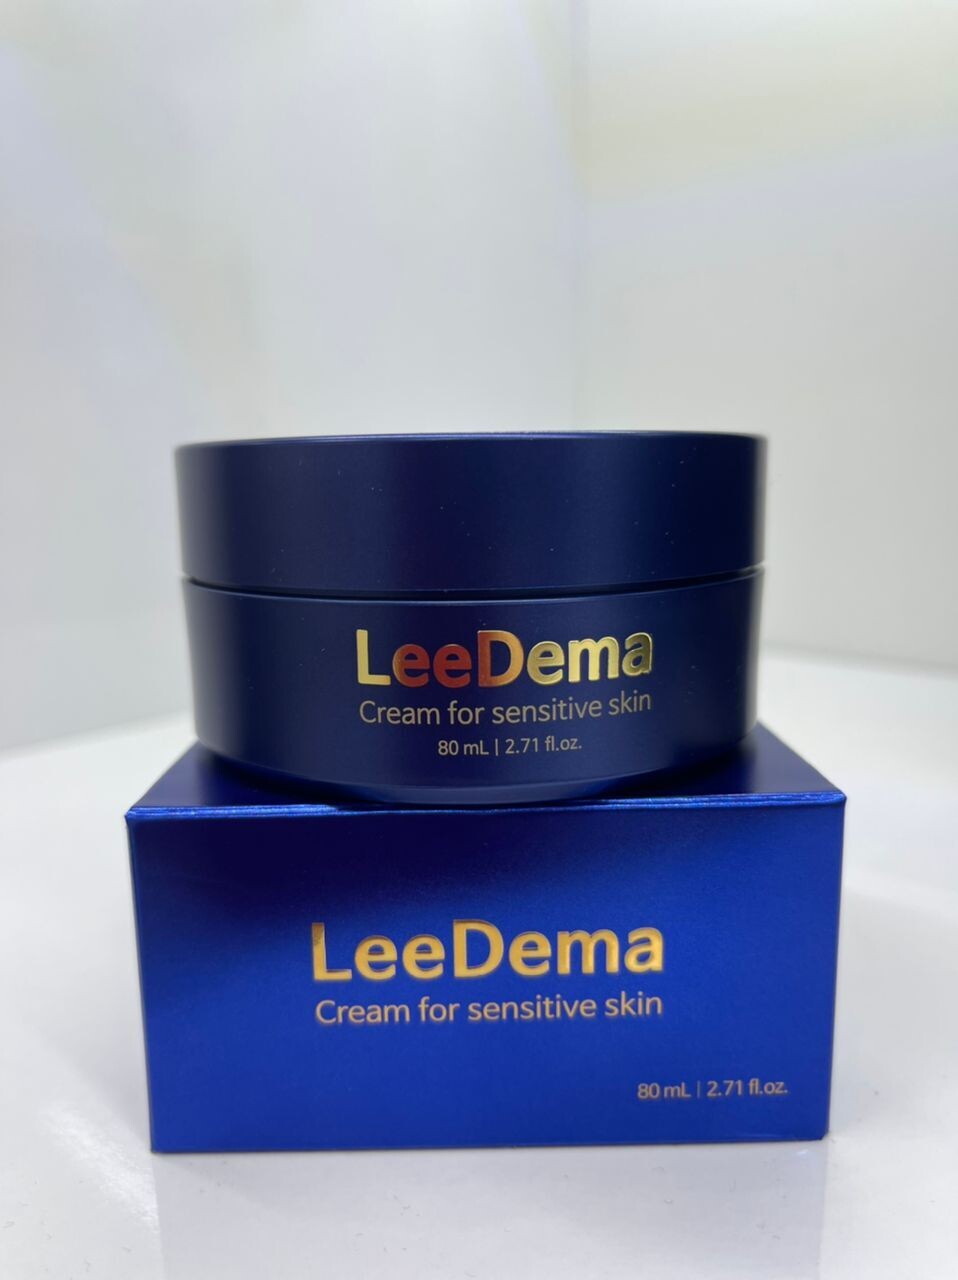 Lee Dema Cream for sensitive skin